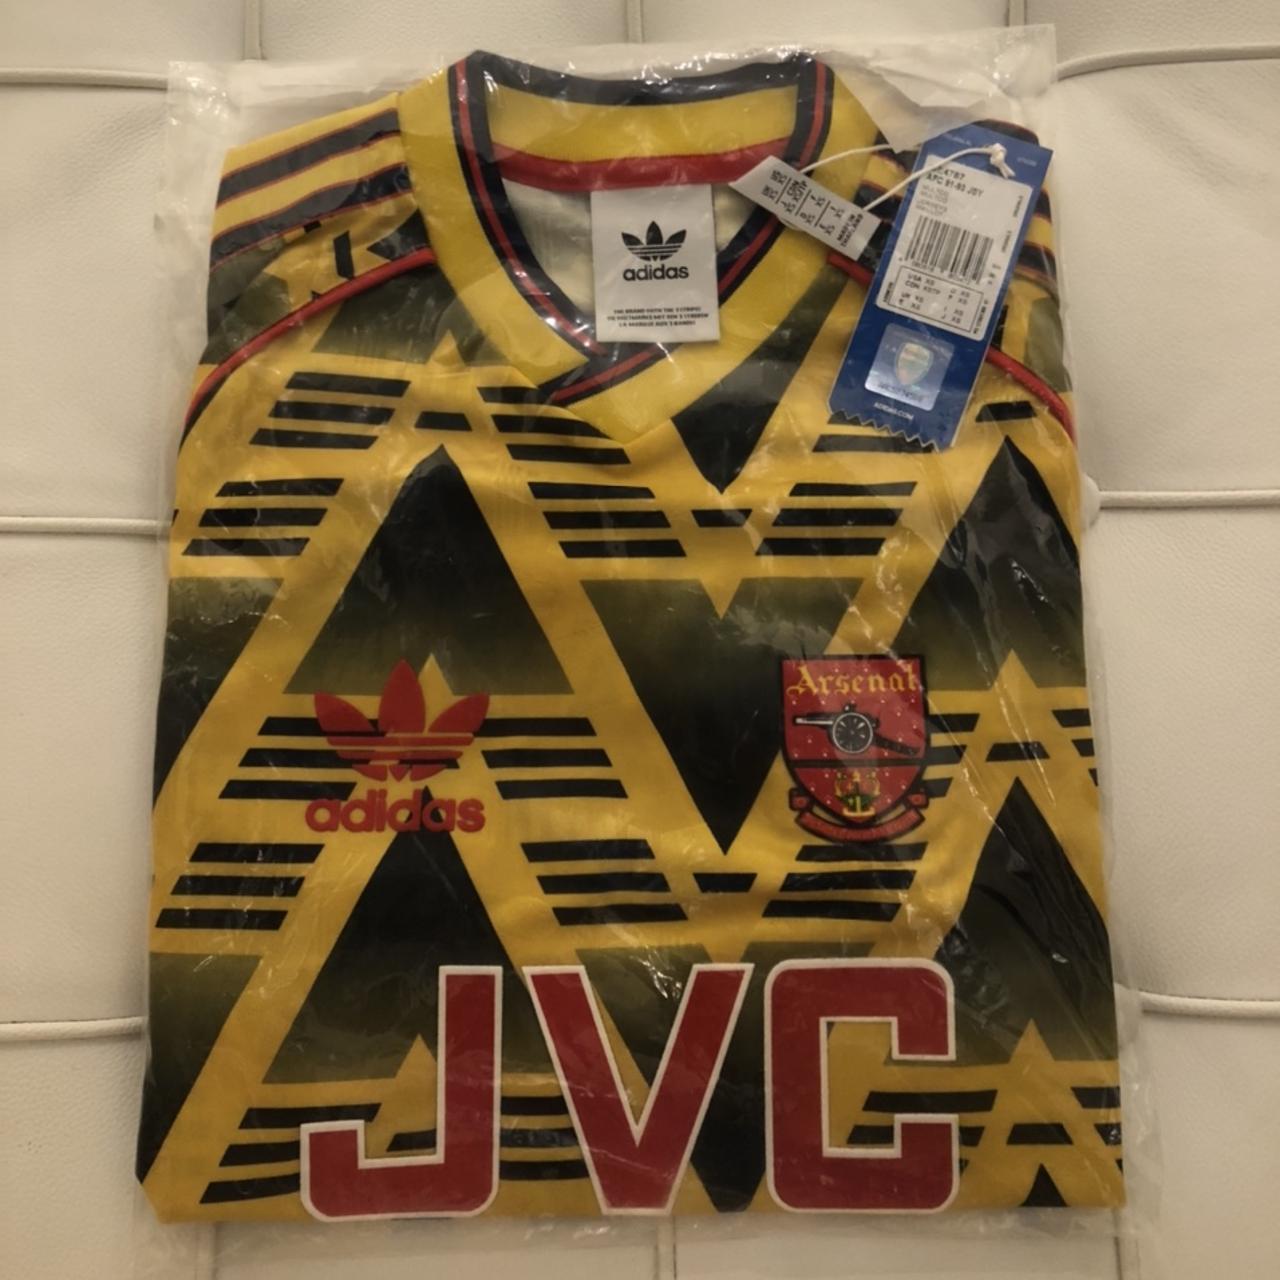 Arsenal Bruised Banana away shirt 91-93 Adidas Original Retro Medium ltd  edition